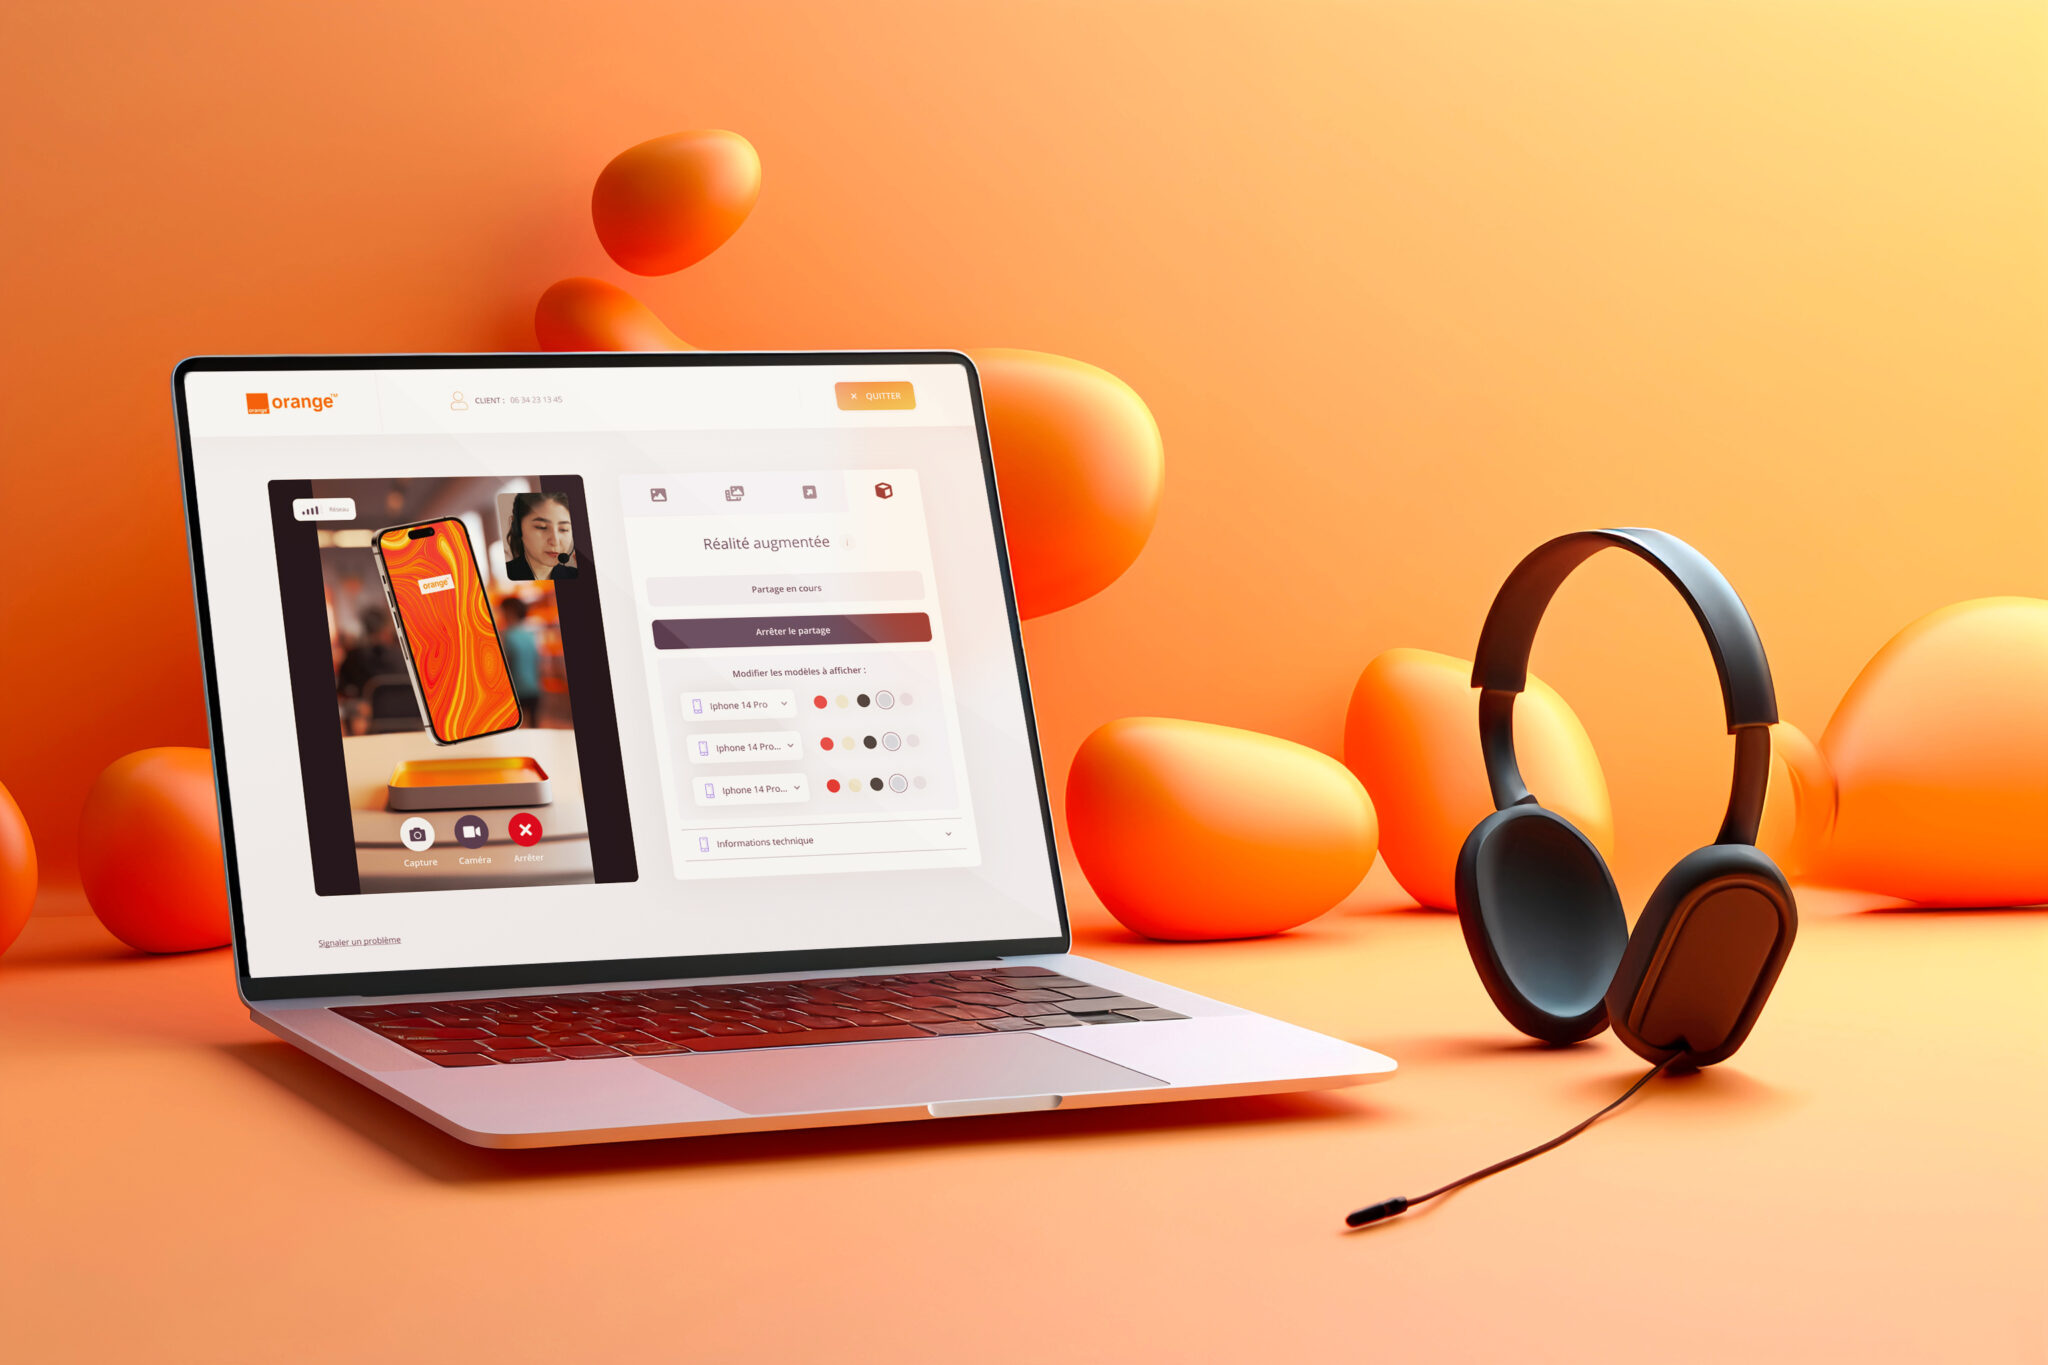 Macbook pro mockup of orange interface